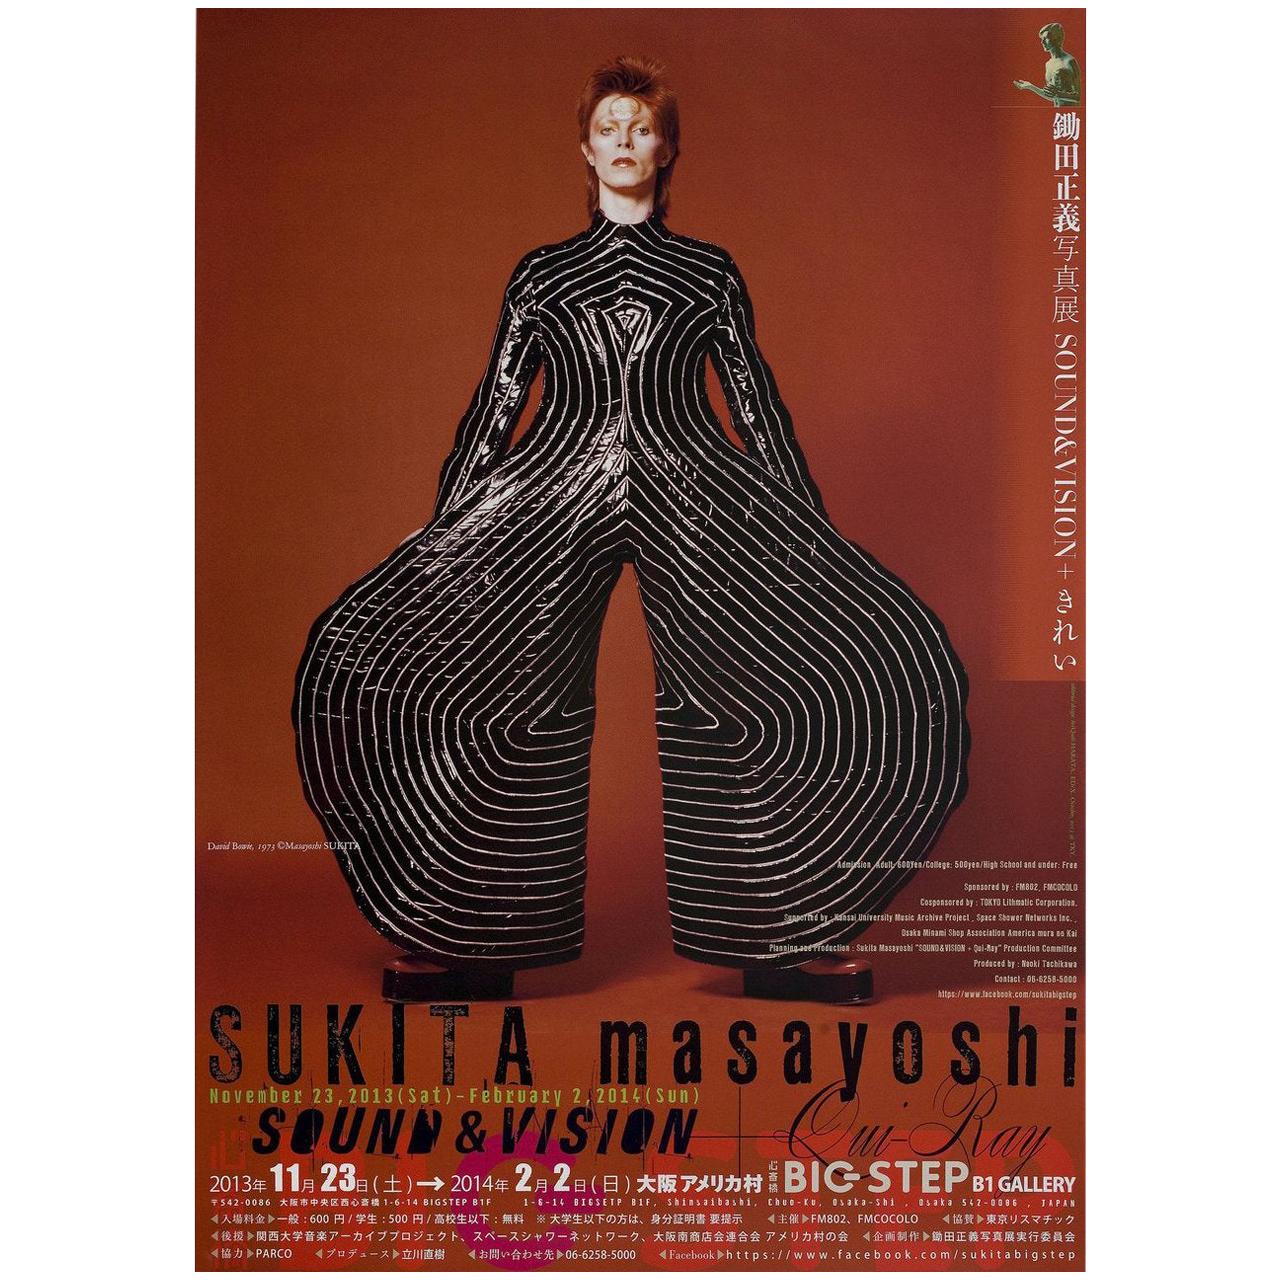 “Sukita Masayoshi, Sound & Vision” David Bowie Japanese A1 Exhibition Poster